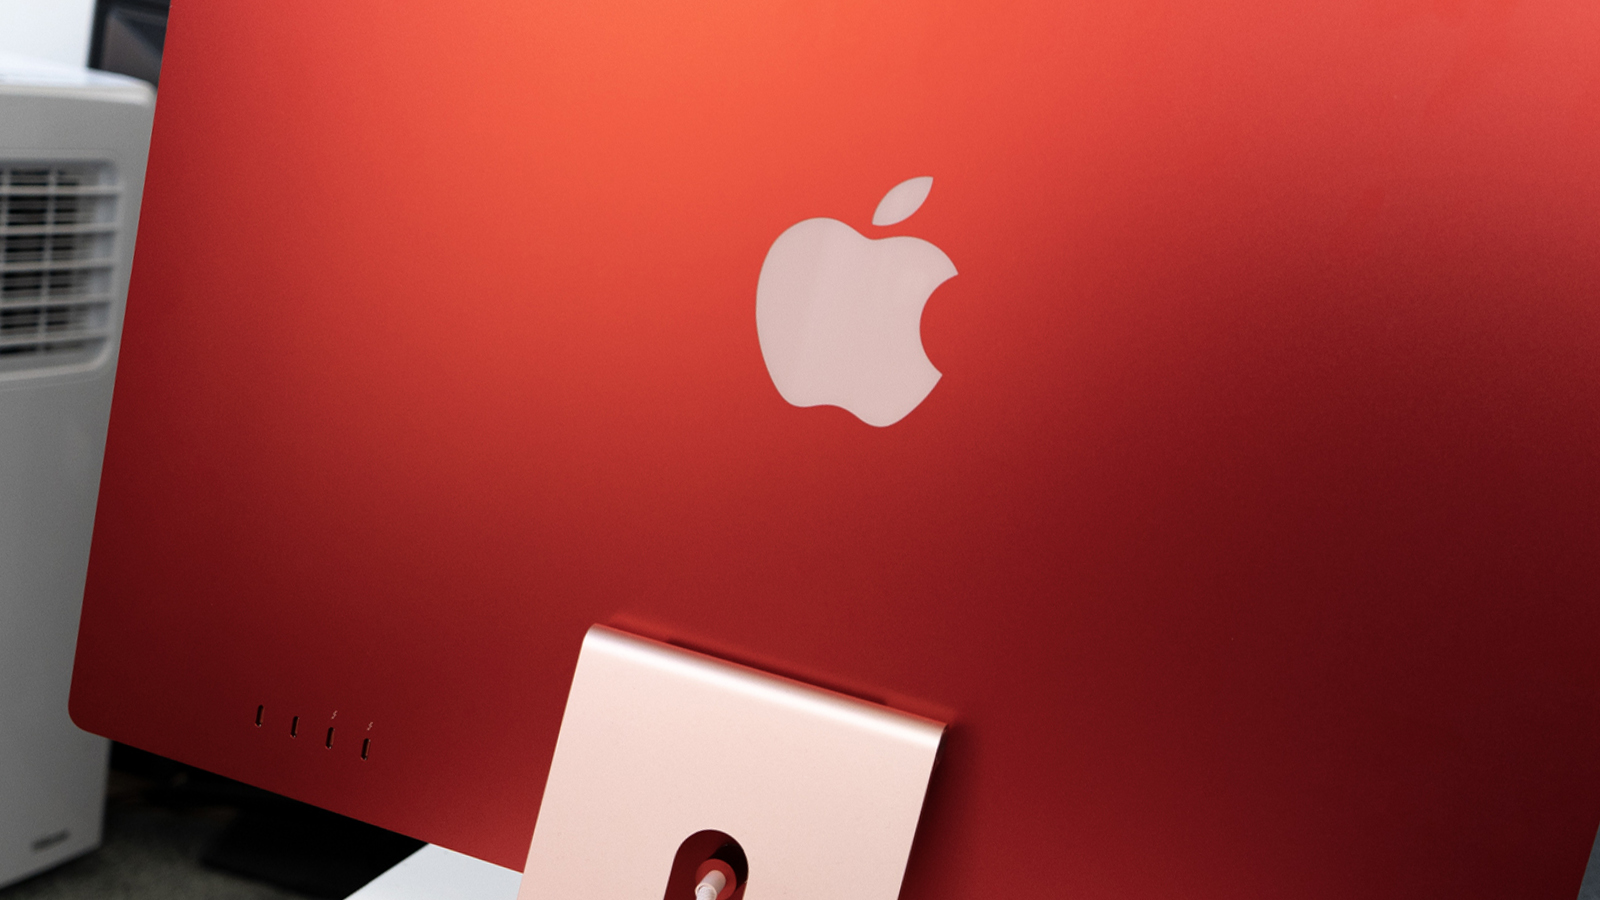 Mac 1 نوفمبر 2021 تعليقان "سيحصل جهاز iMac مقاس 27 بوصة على ترقية رائعة مطلع العام المقبل"